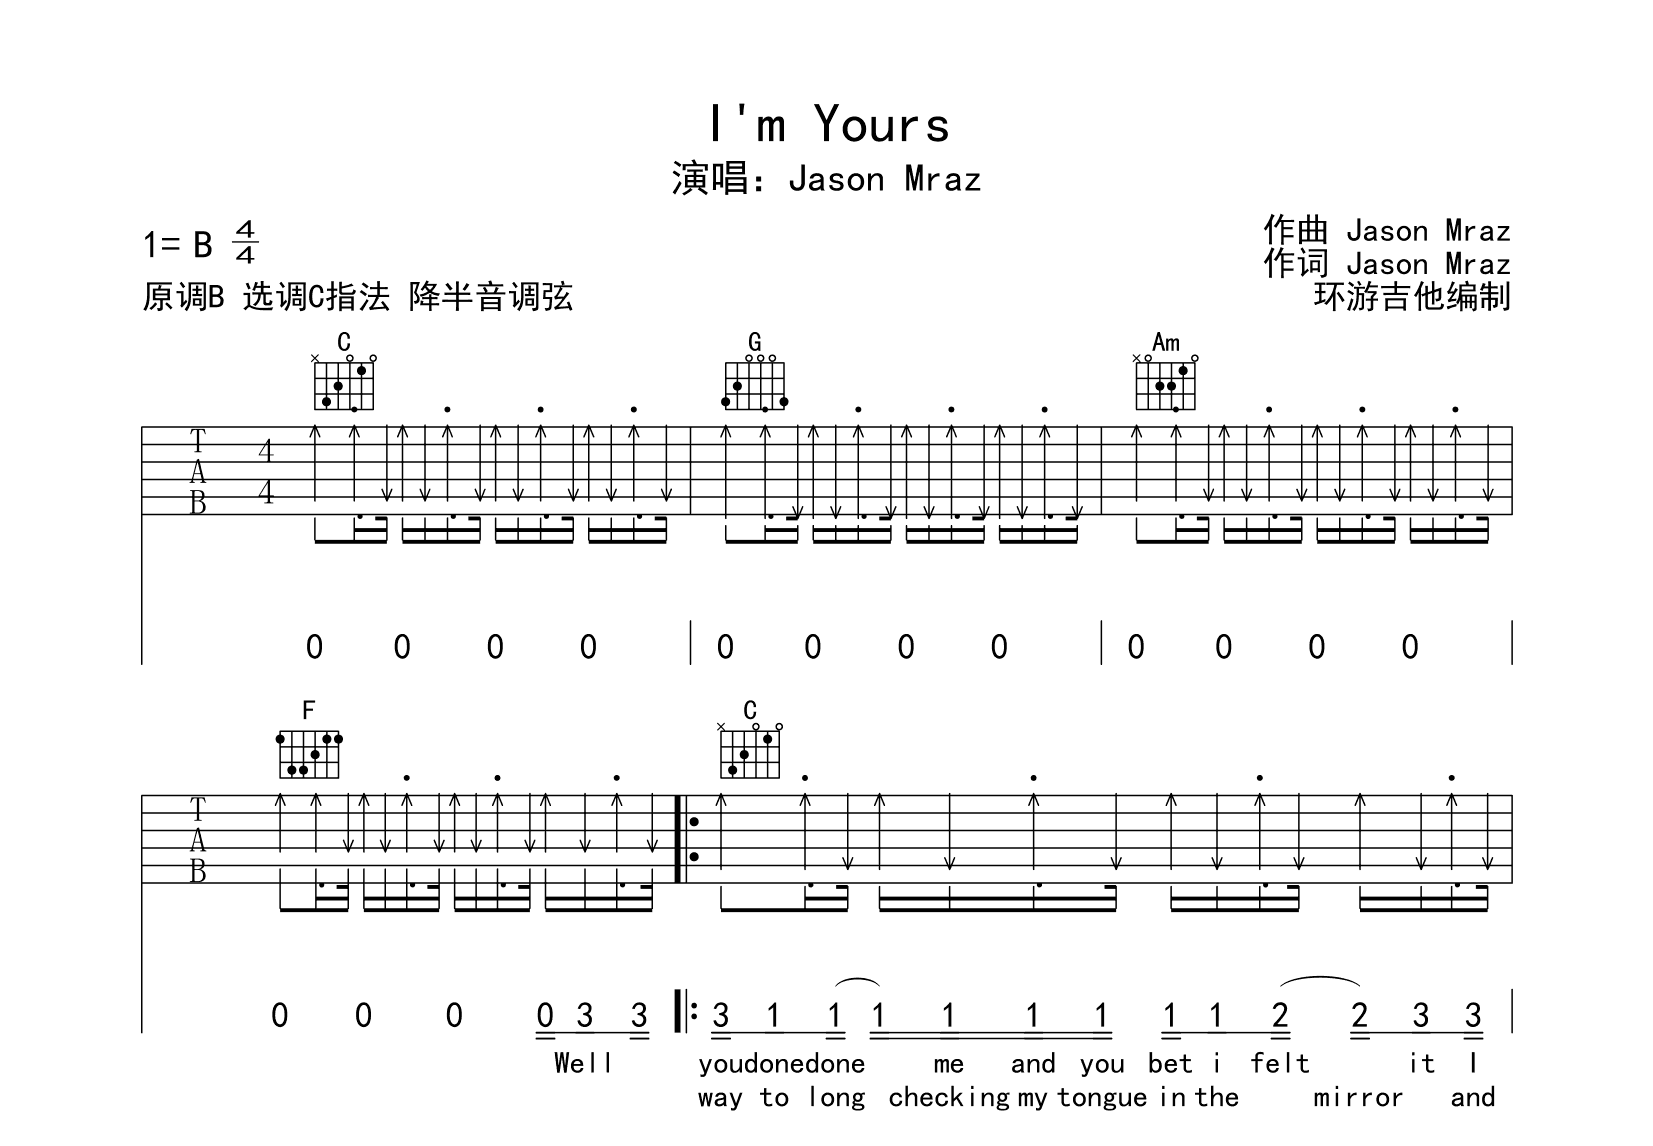 Im yours吉他谱 - Jason,Mraz - 吉他弹唱谱 - 琴谱网